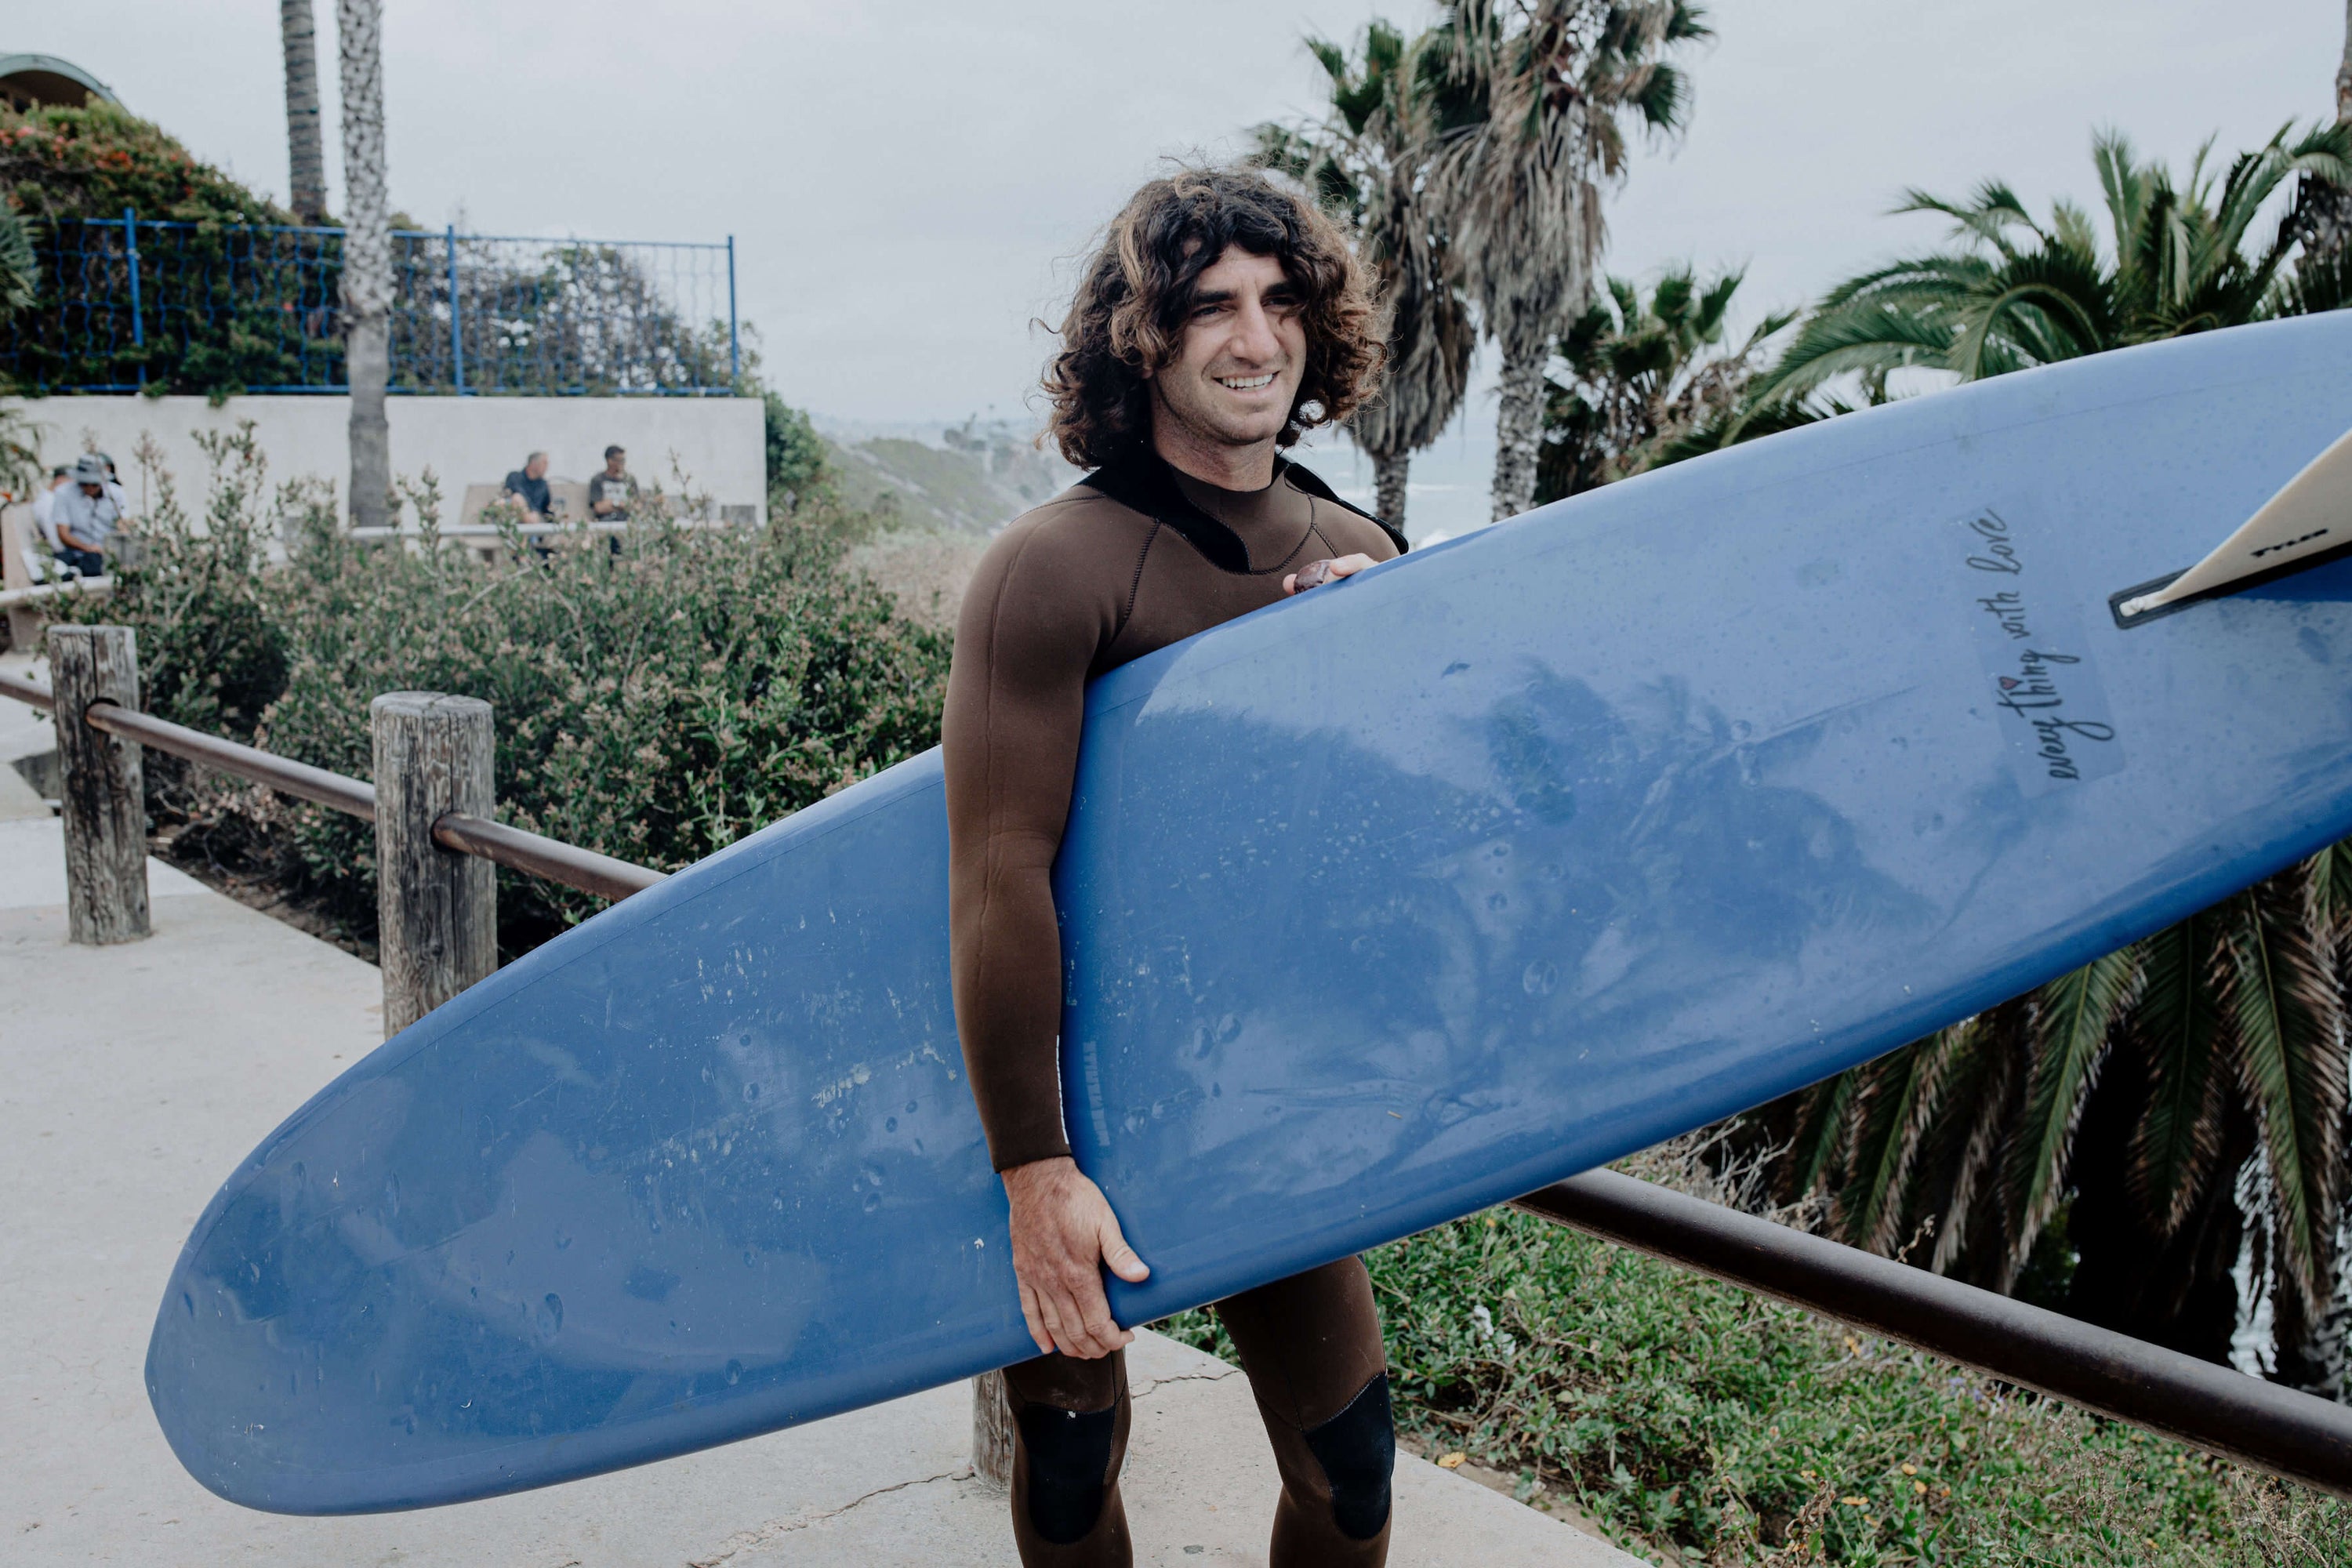 Man carrying blue surfboard in california